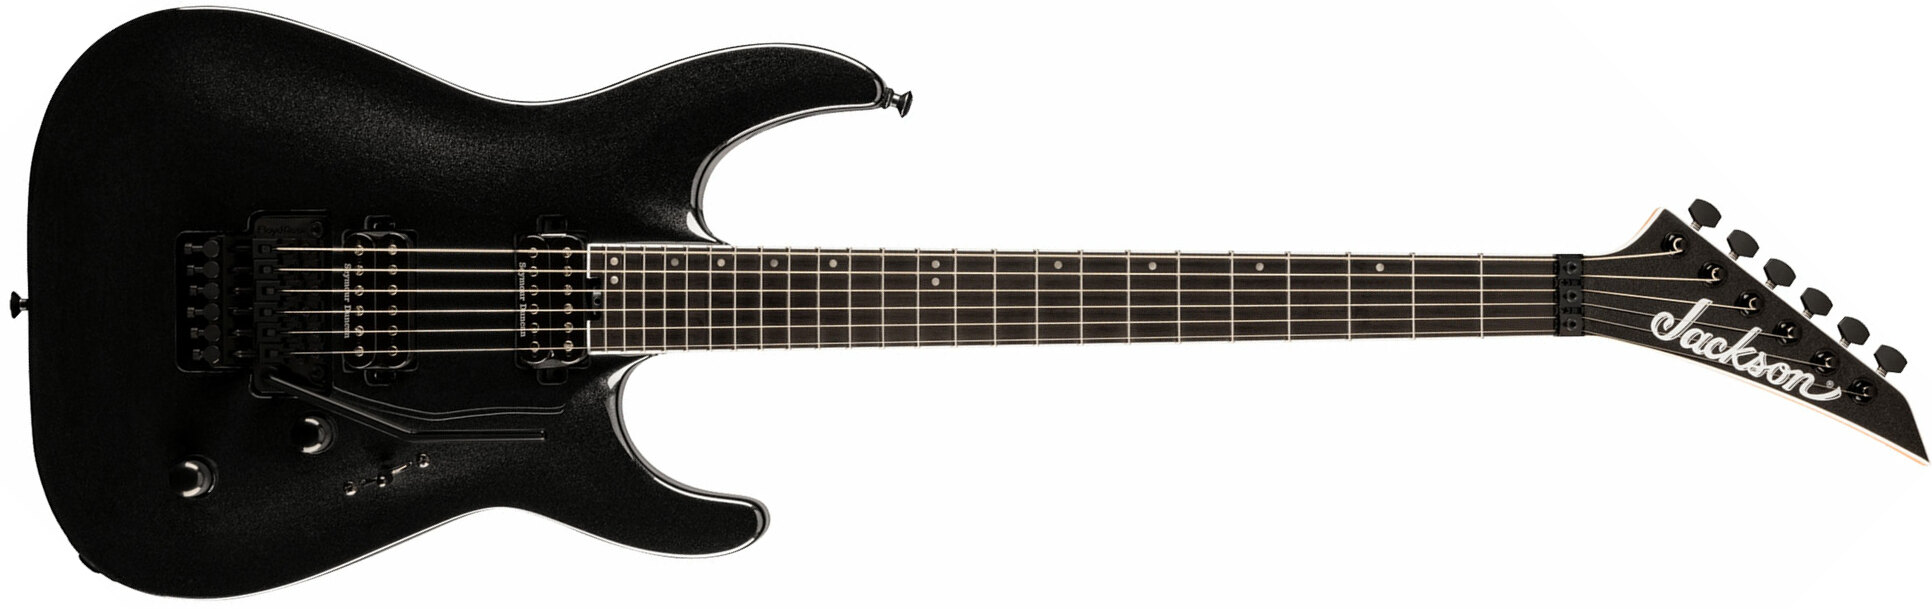 Jackson Dinky Dka Pro Plus 2h Seymour Duncan Fr Eb - Metallic Black - Str shape electric guitar - Main picture